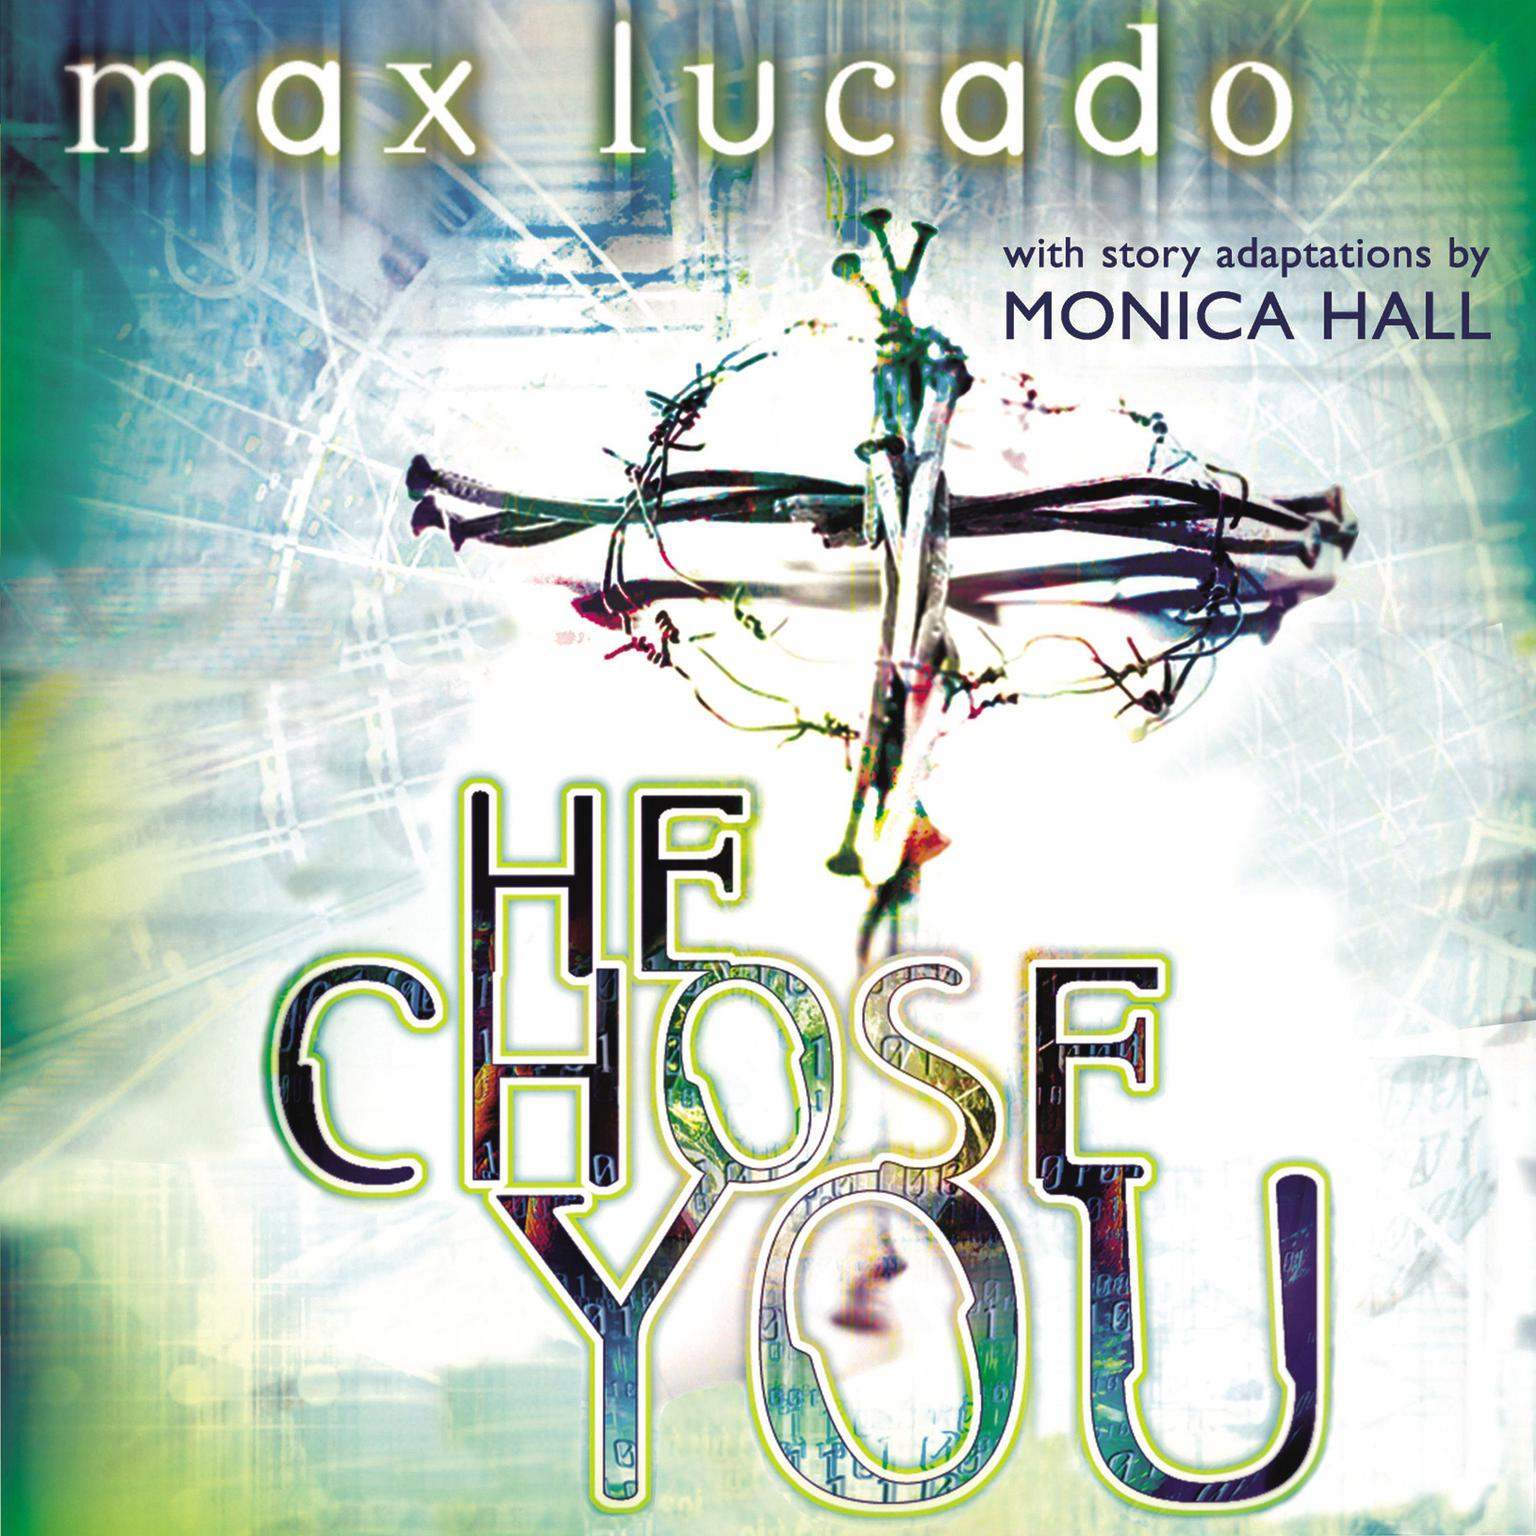 He Chose You Audiobook, by Max Lucado